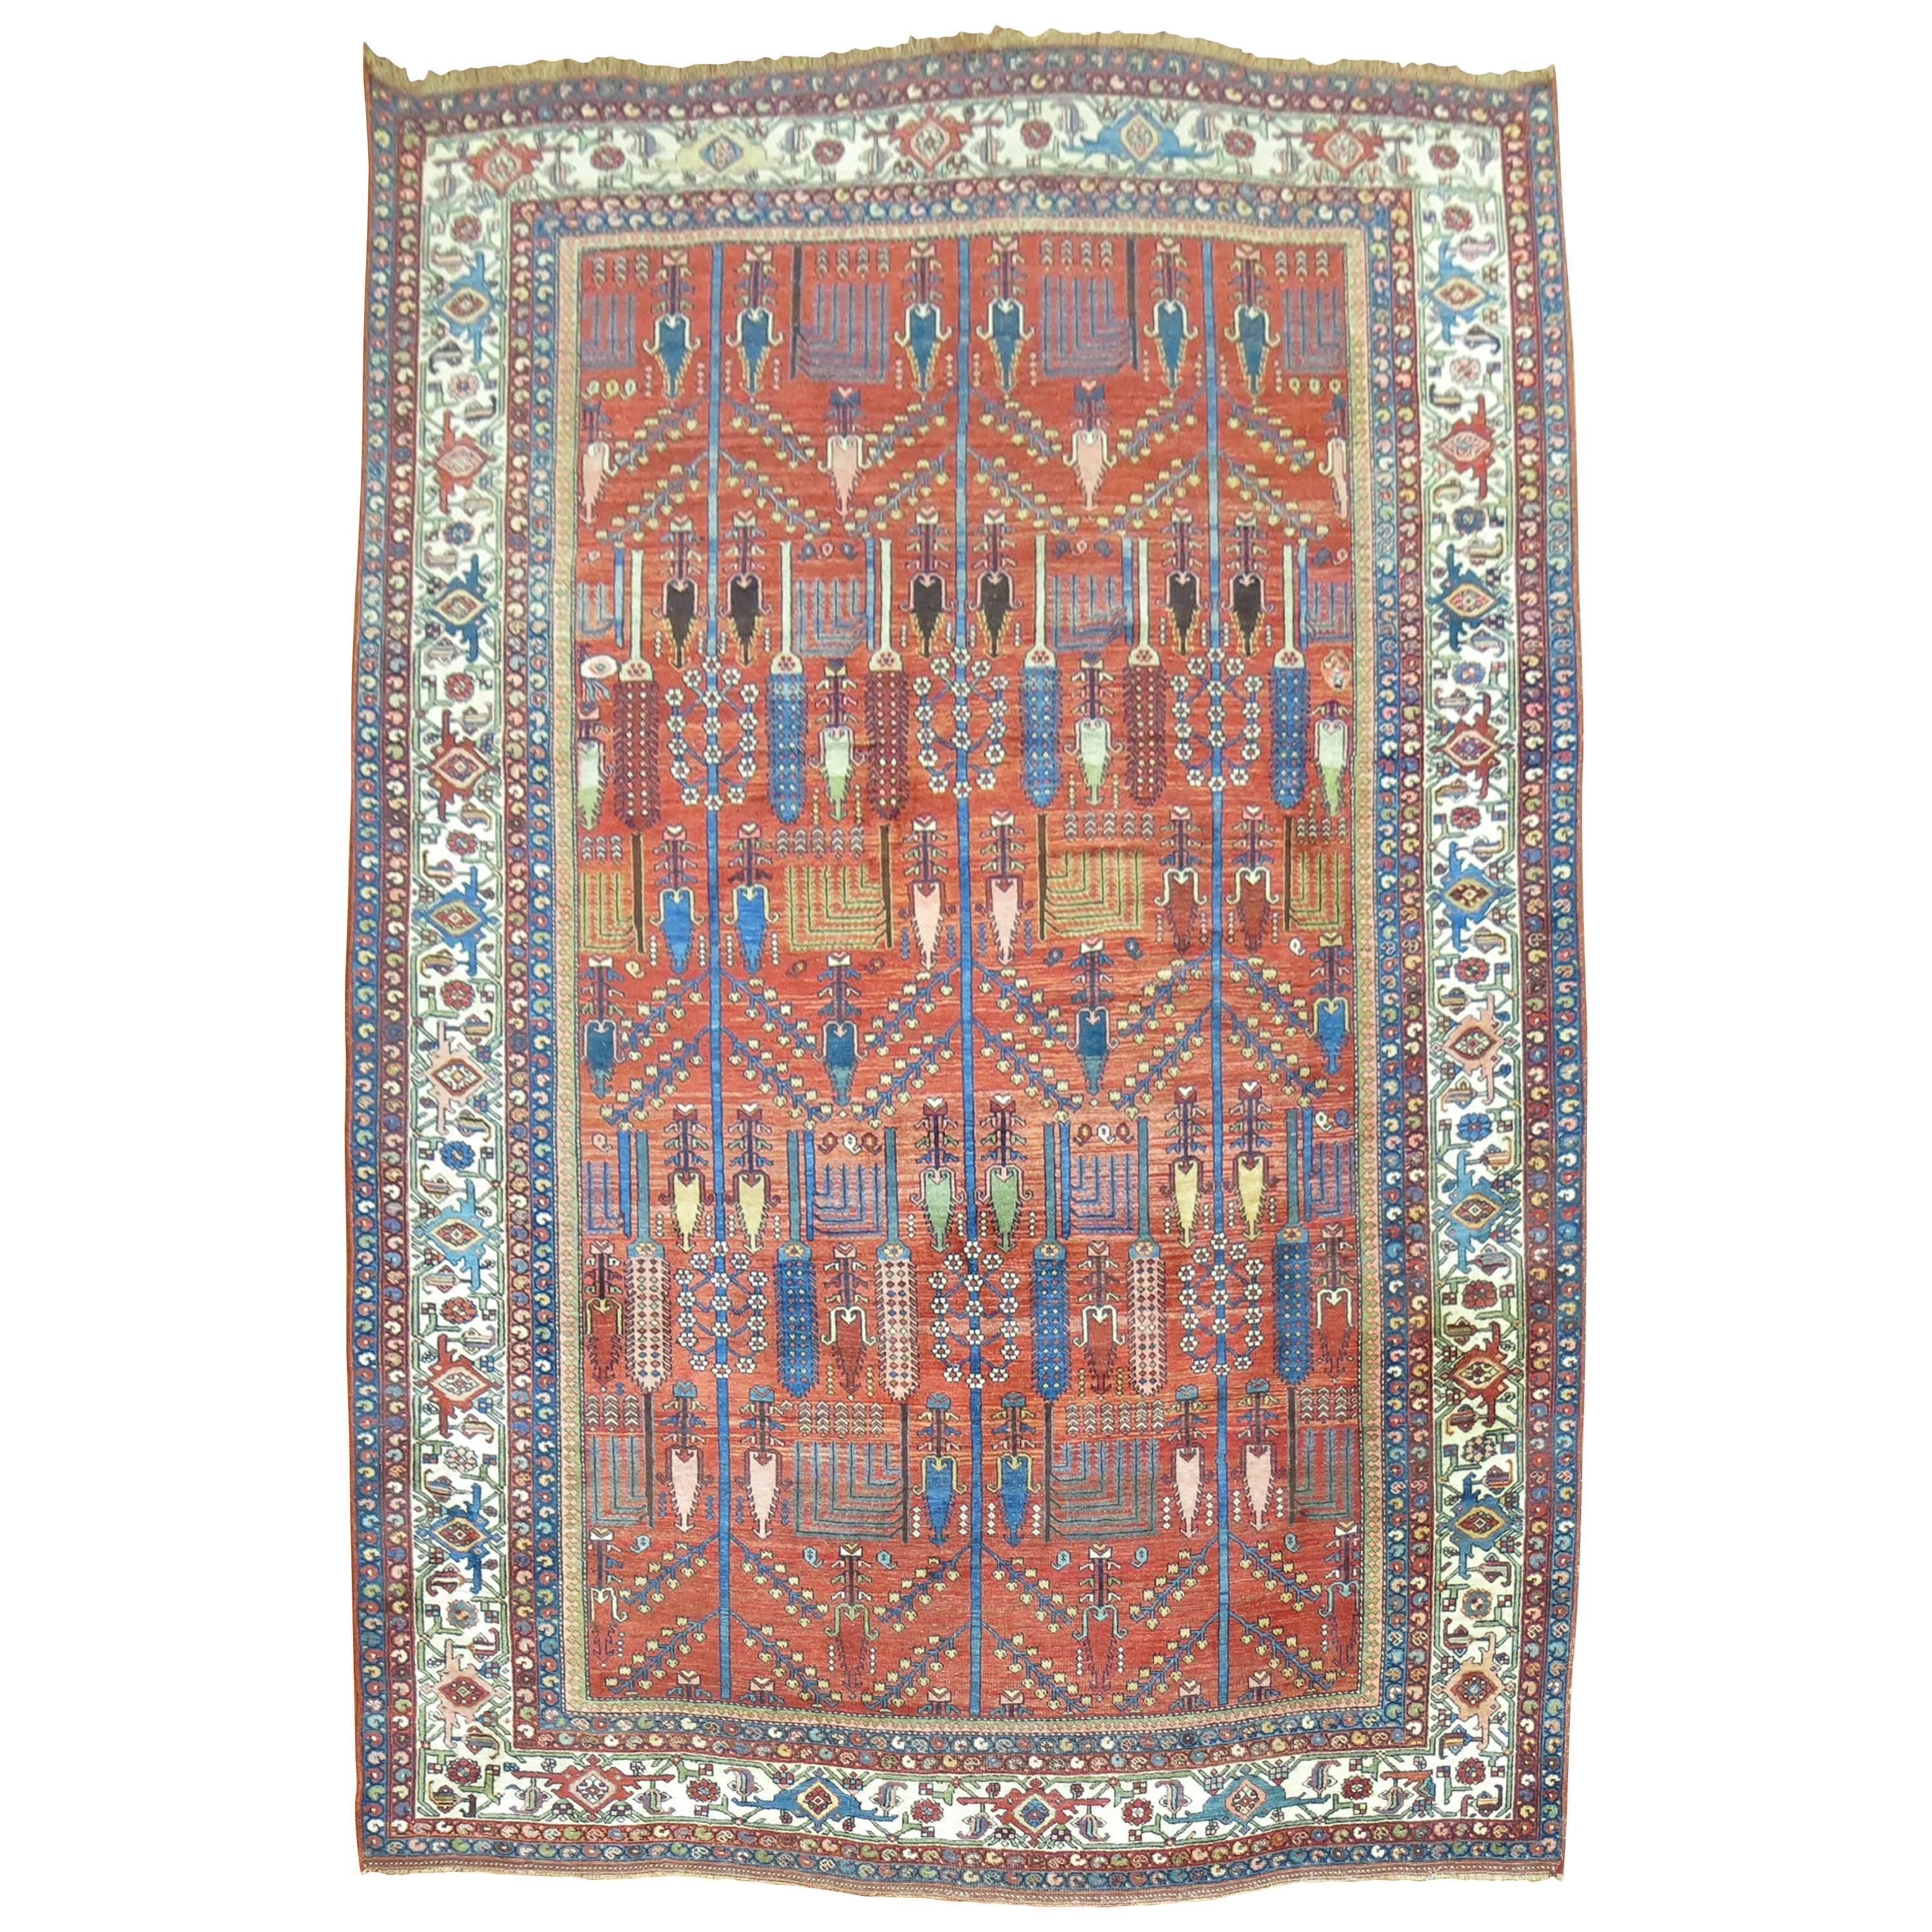 Antiker persischer Bidjar-Baumteppich aus Weidenholz